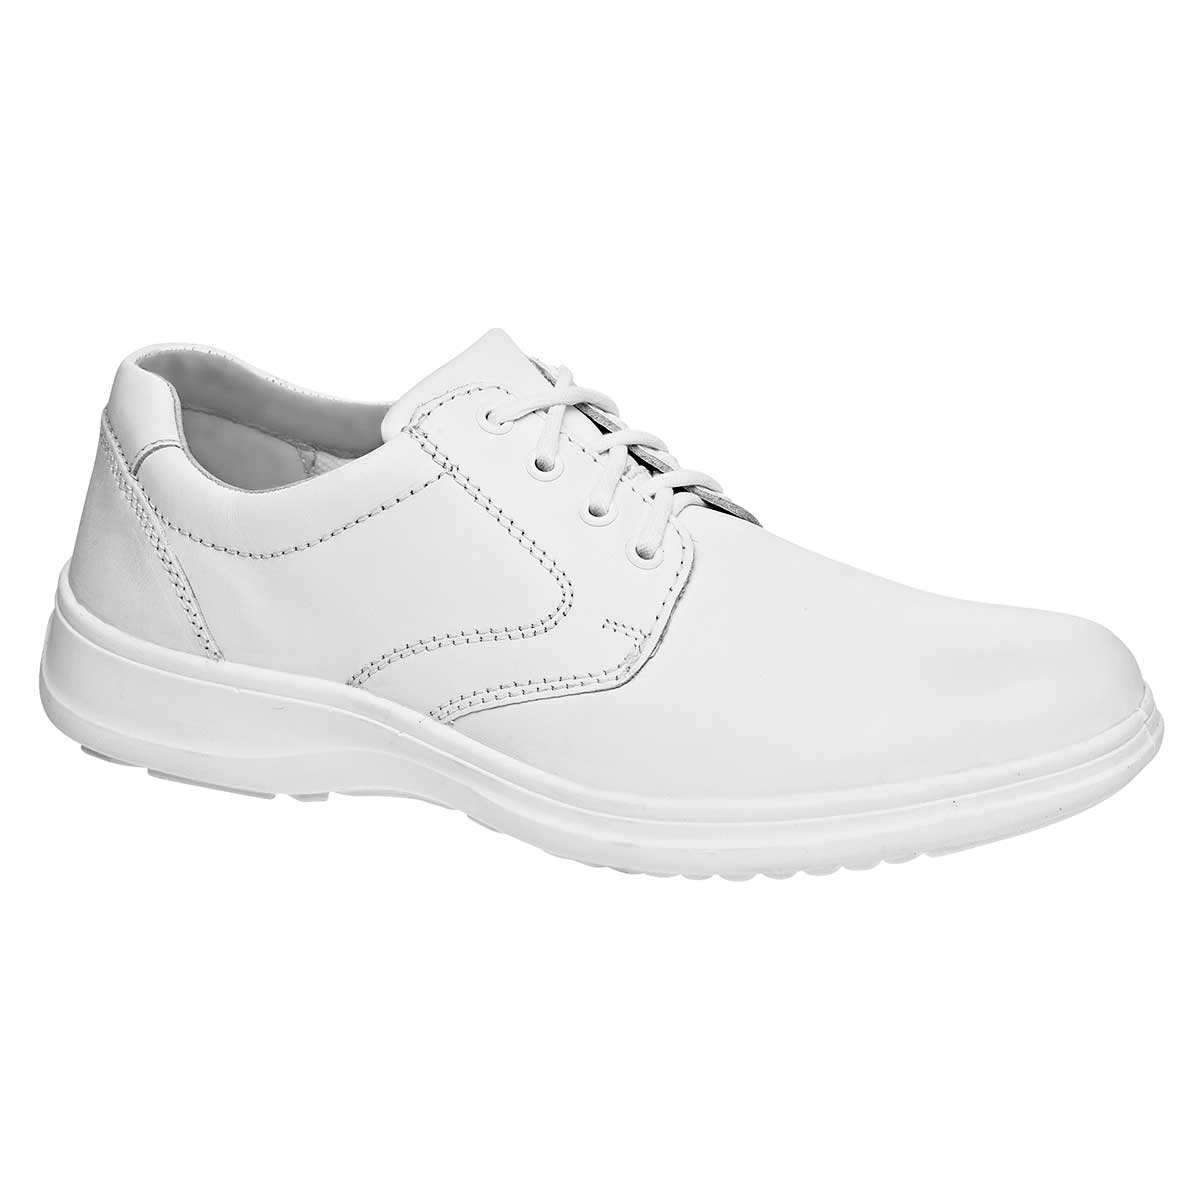 Pakar.com - Mayo: Regalos para mamá | Zapato especializado para hombre cod-25779